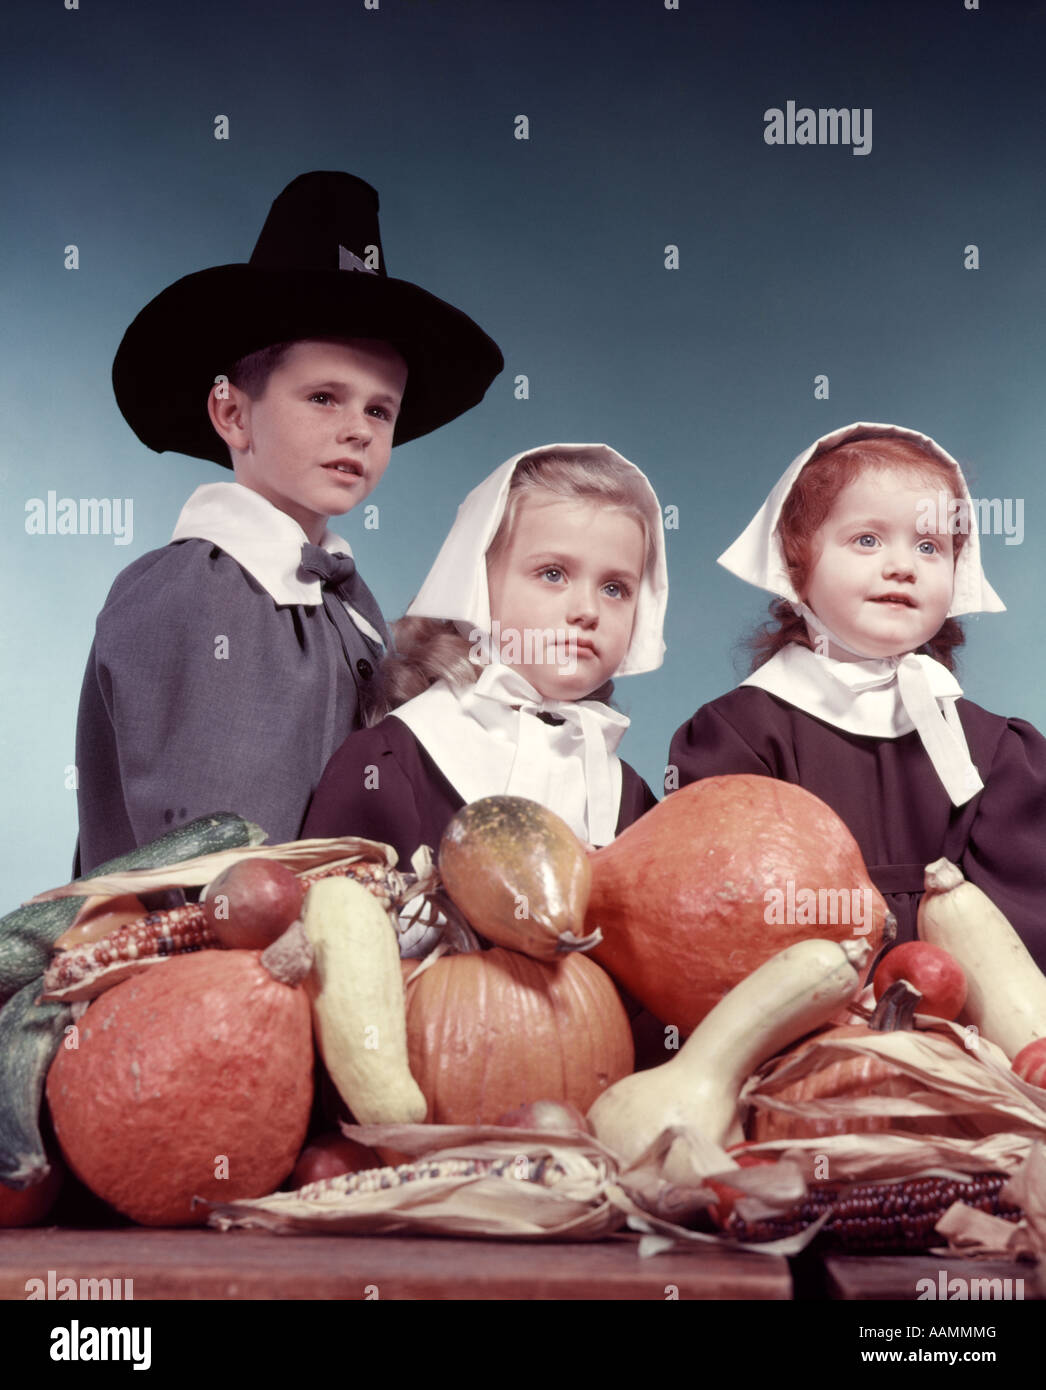 1950s 3 CHILDREN 2 GIRLS 1 BOY DRESSED IN PURITAN PILGRIMS COSTUMES PUMPKIN HARVEST VEGETABLES IN FOREGROUND Stock Photo